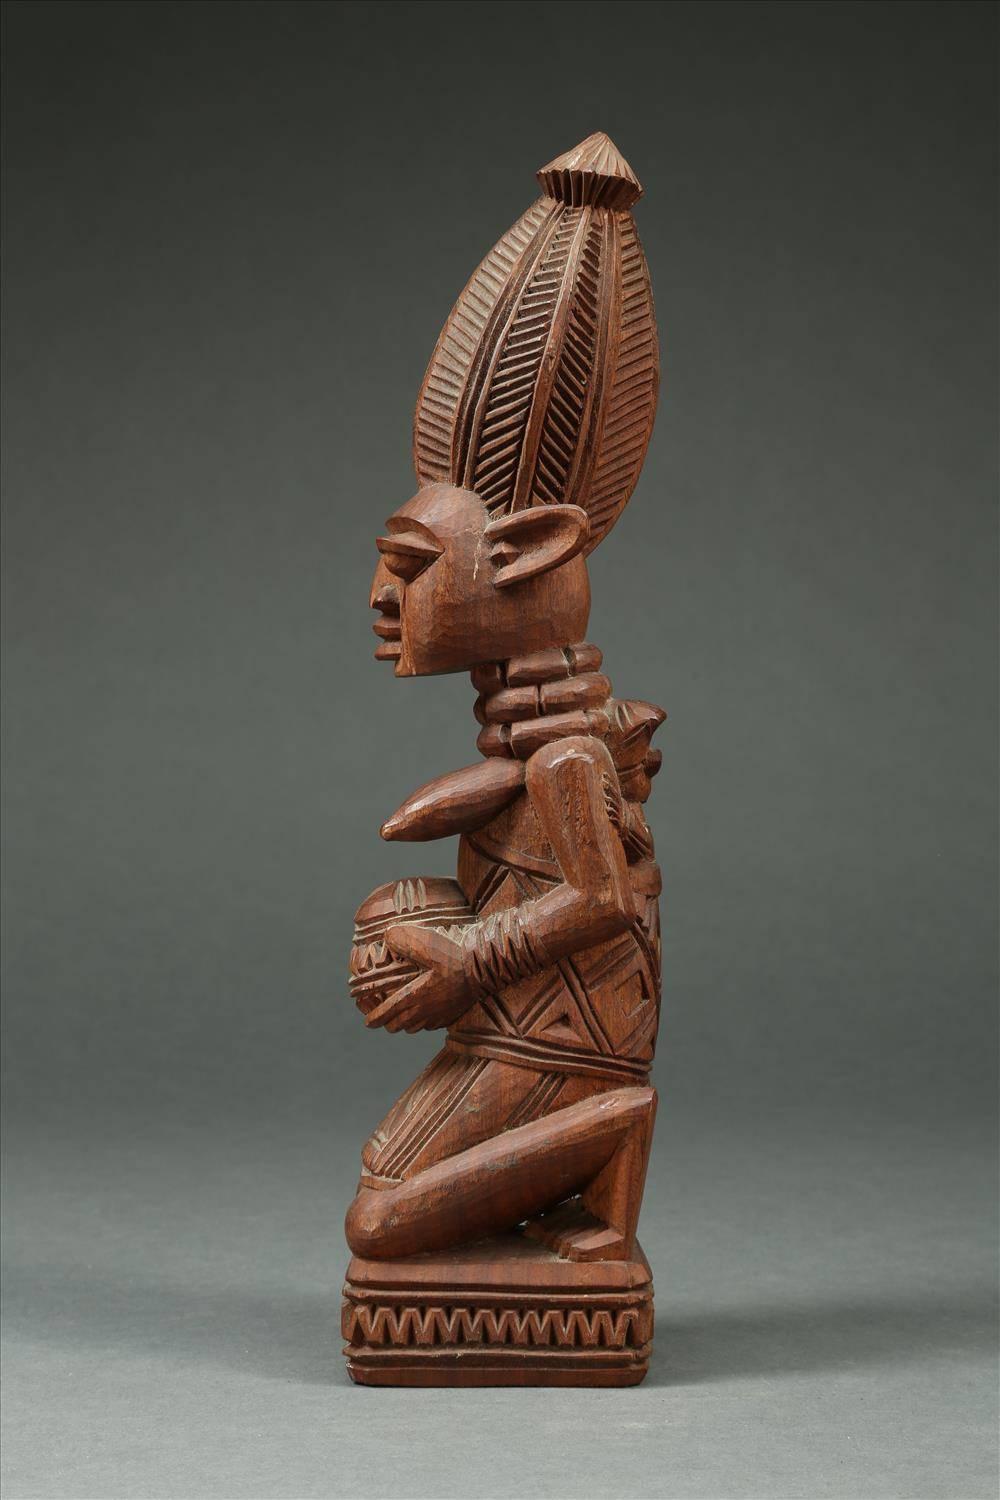 20th Century Tribal Yoruba Maternity Figure holding a Bowl, Signed J.A. Fakeye, Nigeria